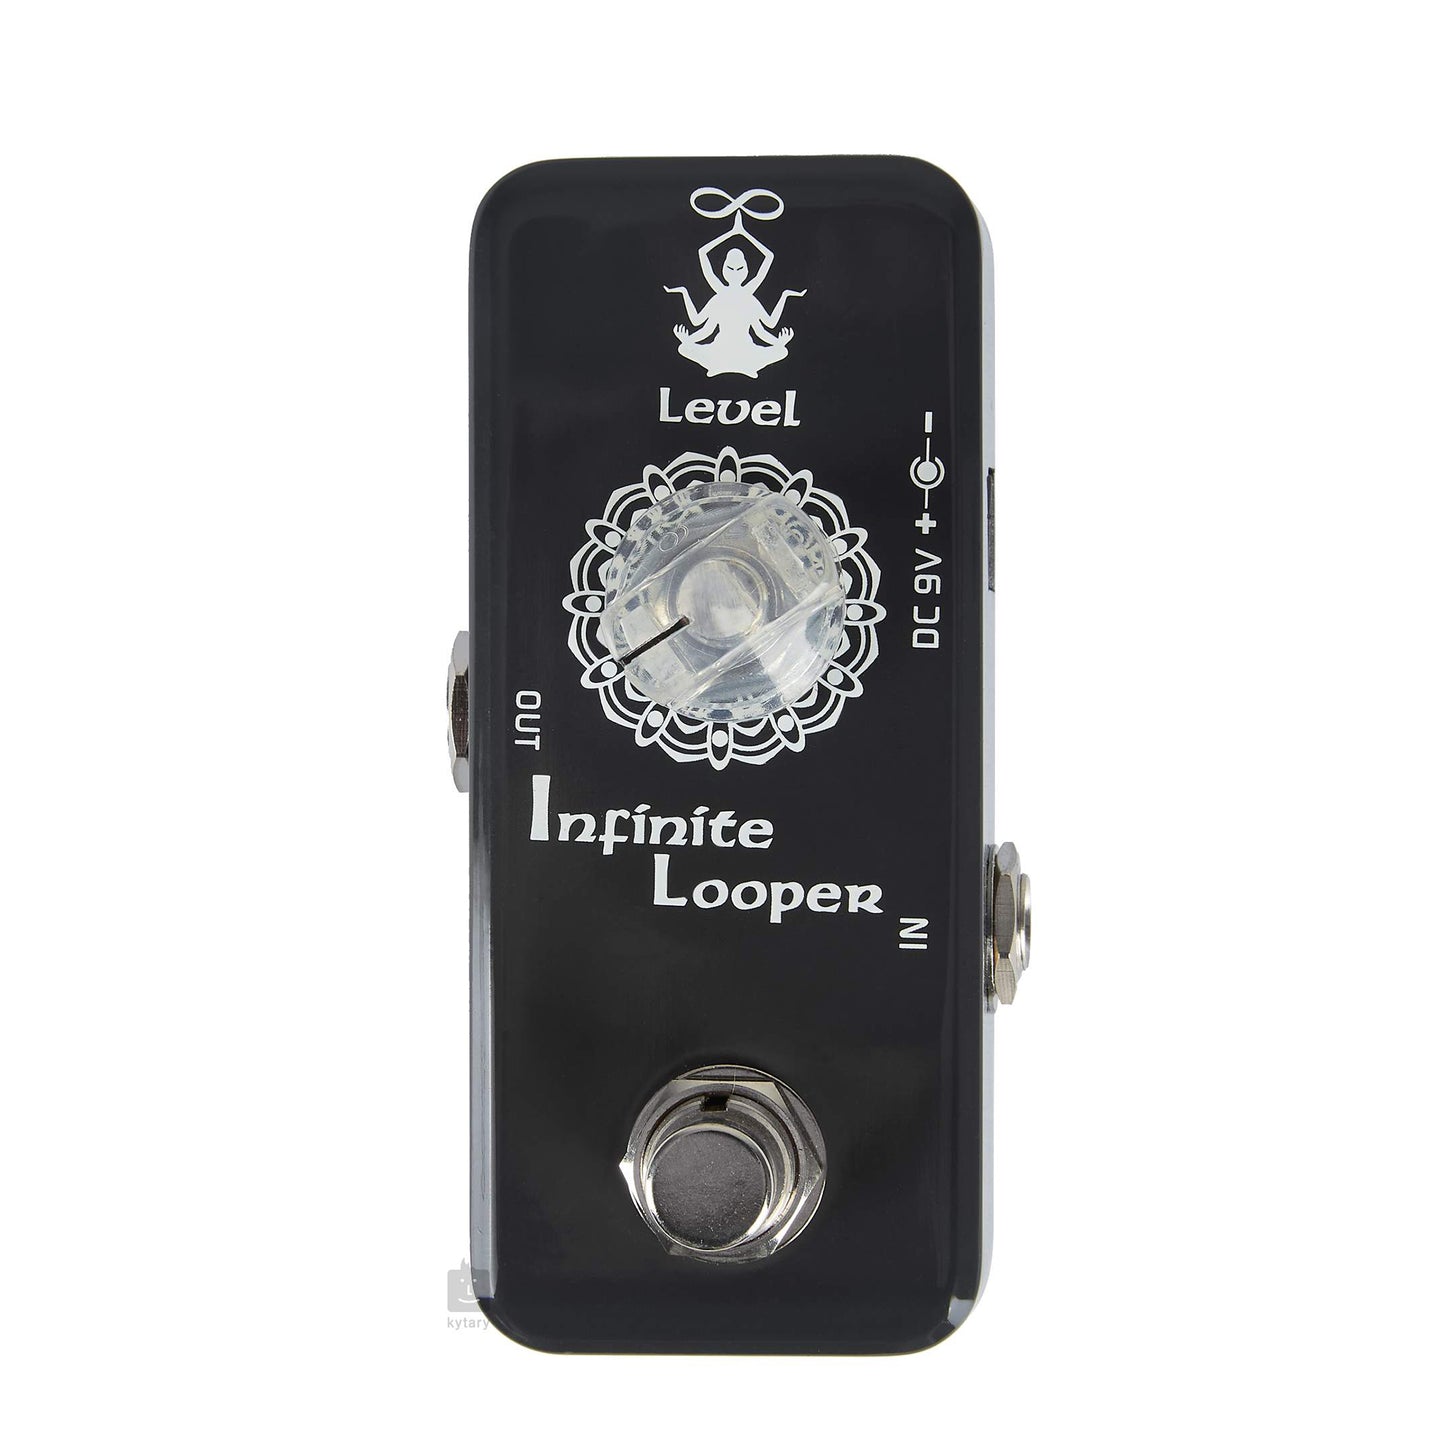 Movall MP-313 Infinite Looper Mini Looper Pedal